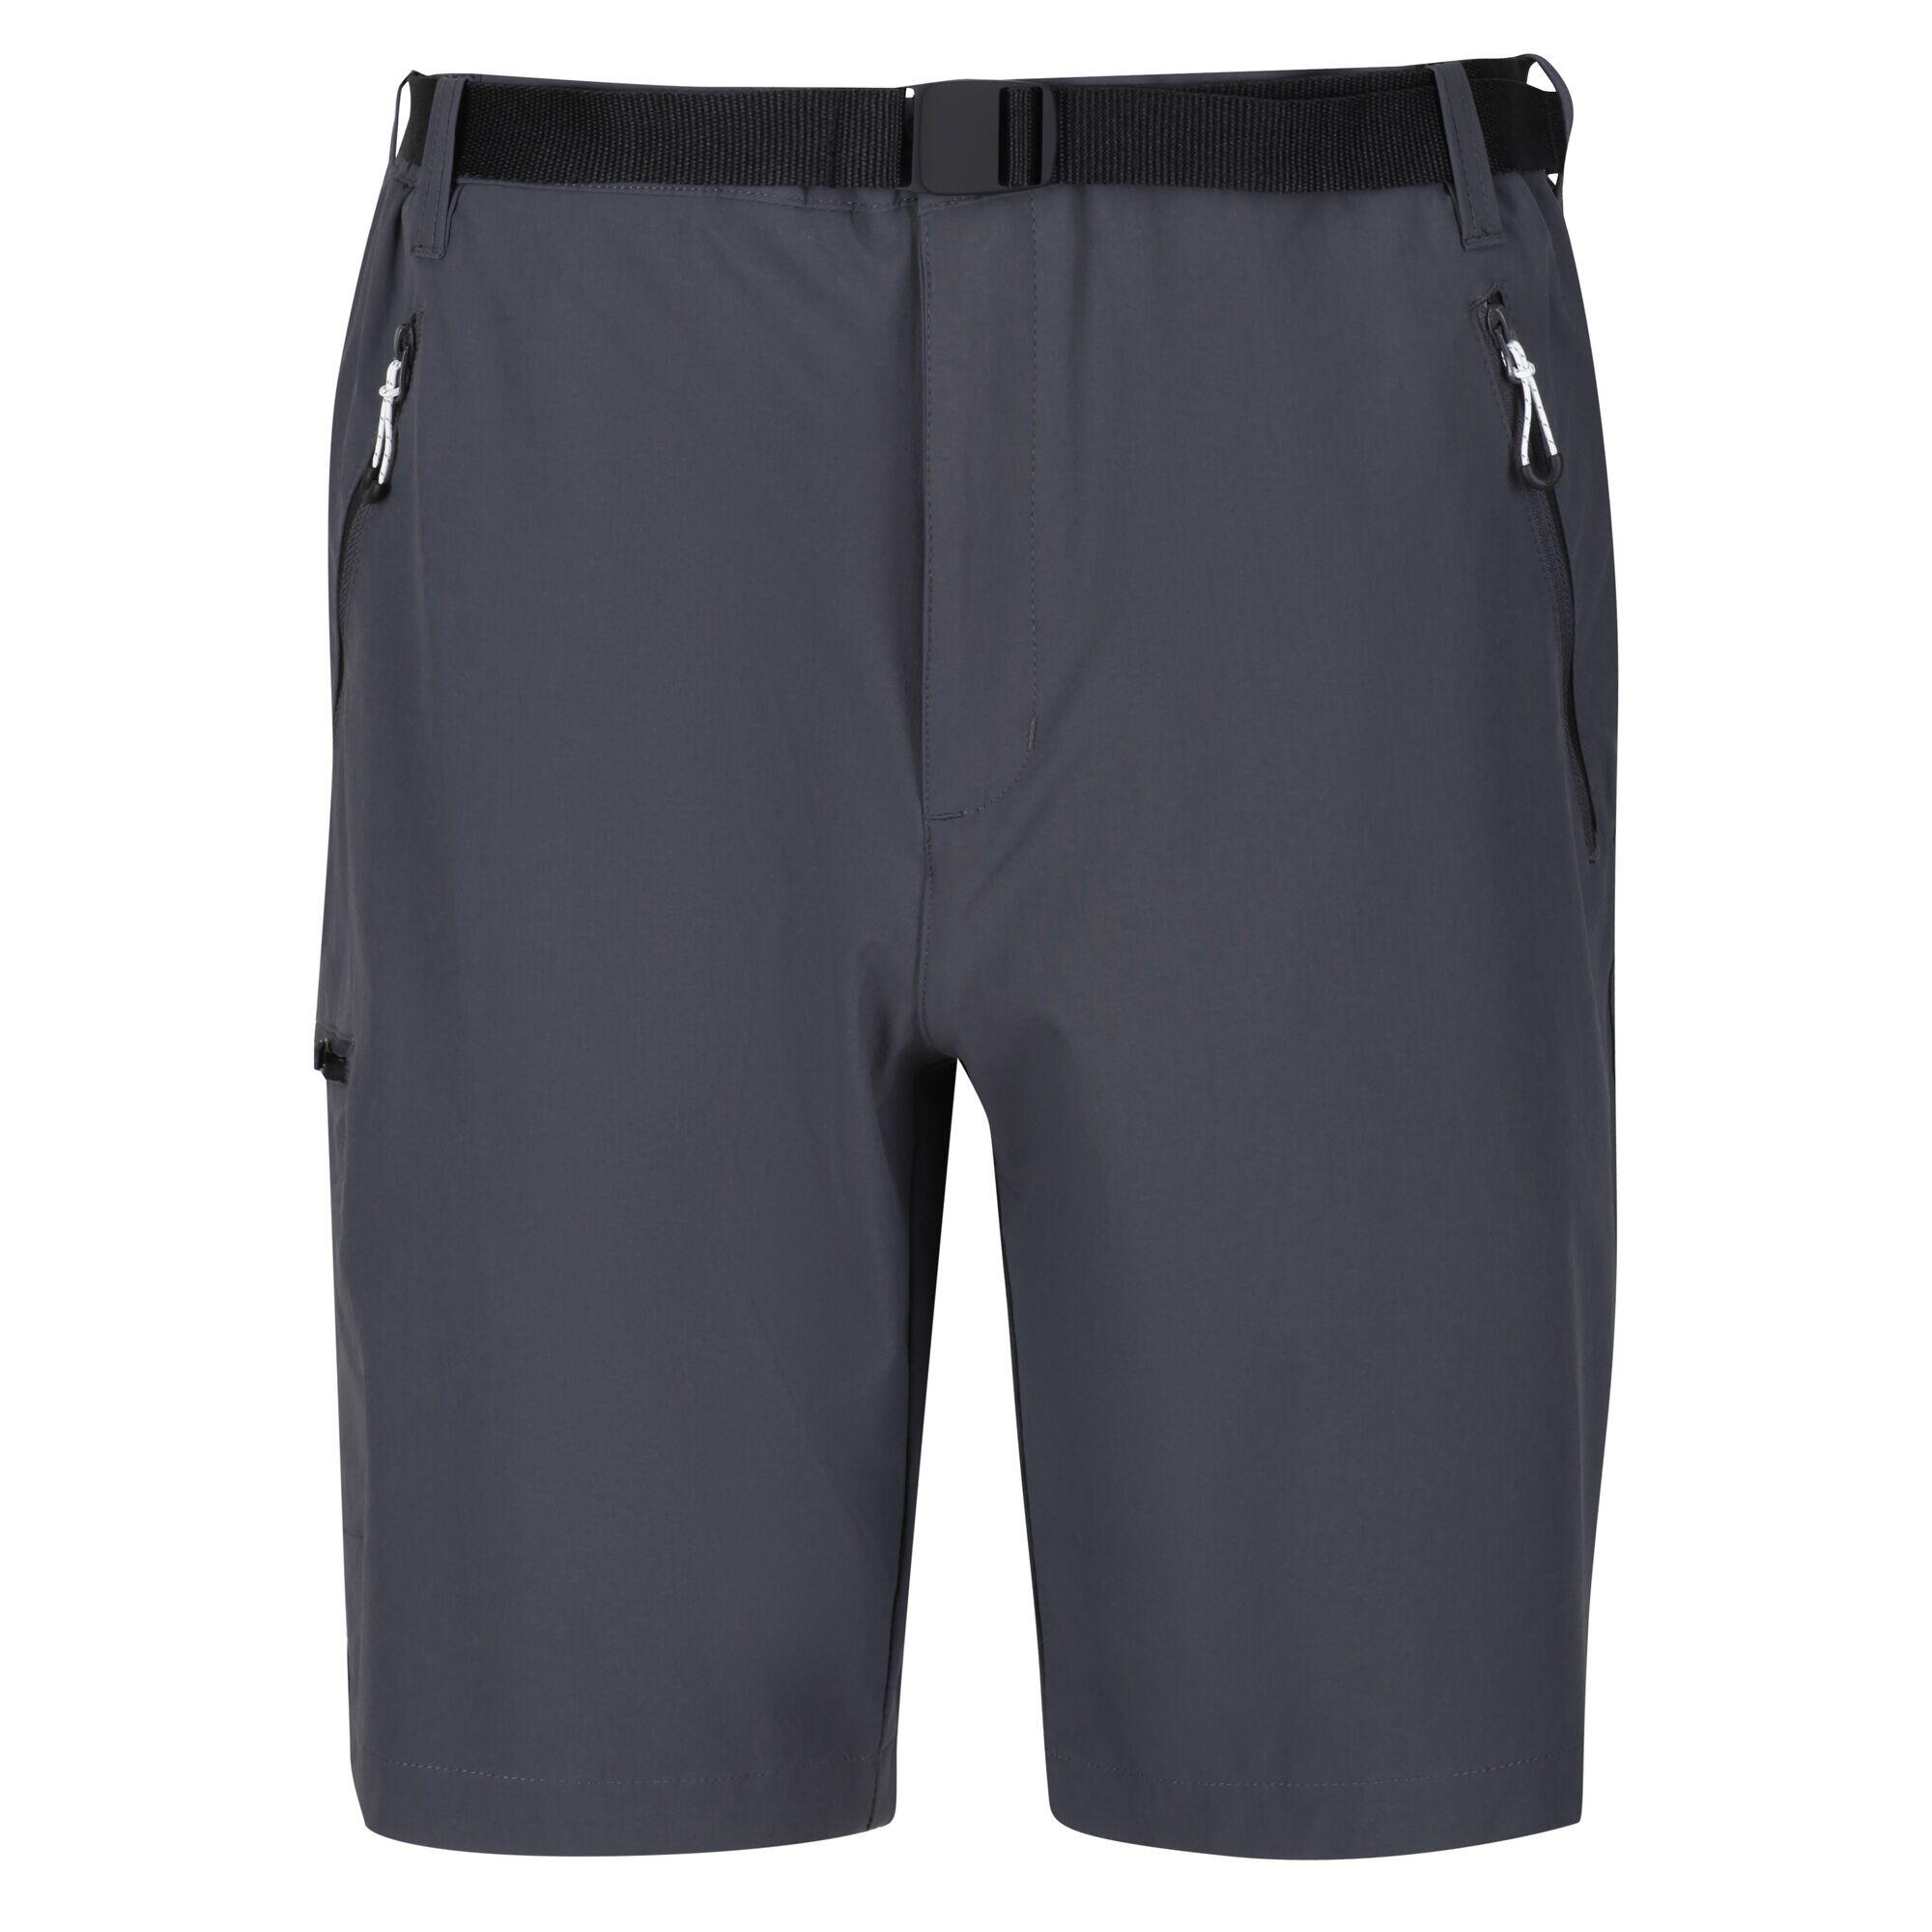 Xert III Men's Hiking Shorts - Mid Grey 5/5